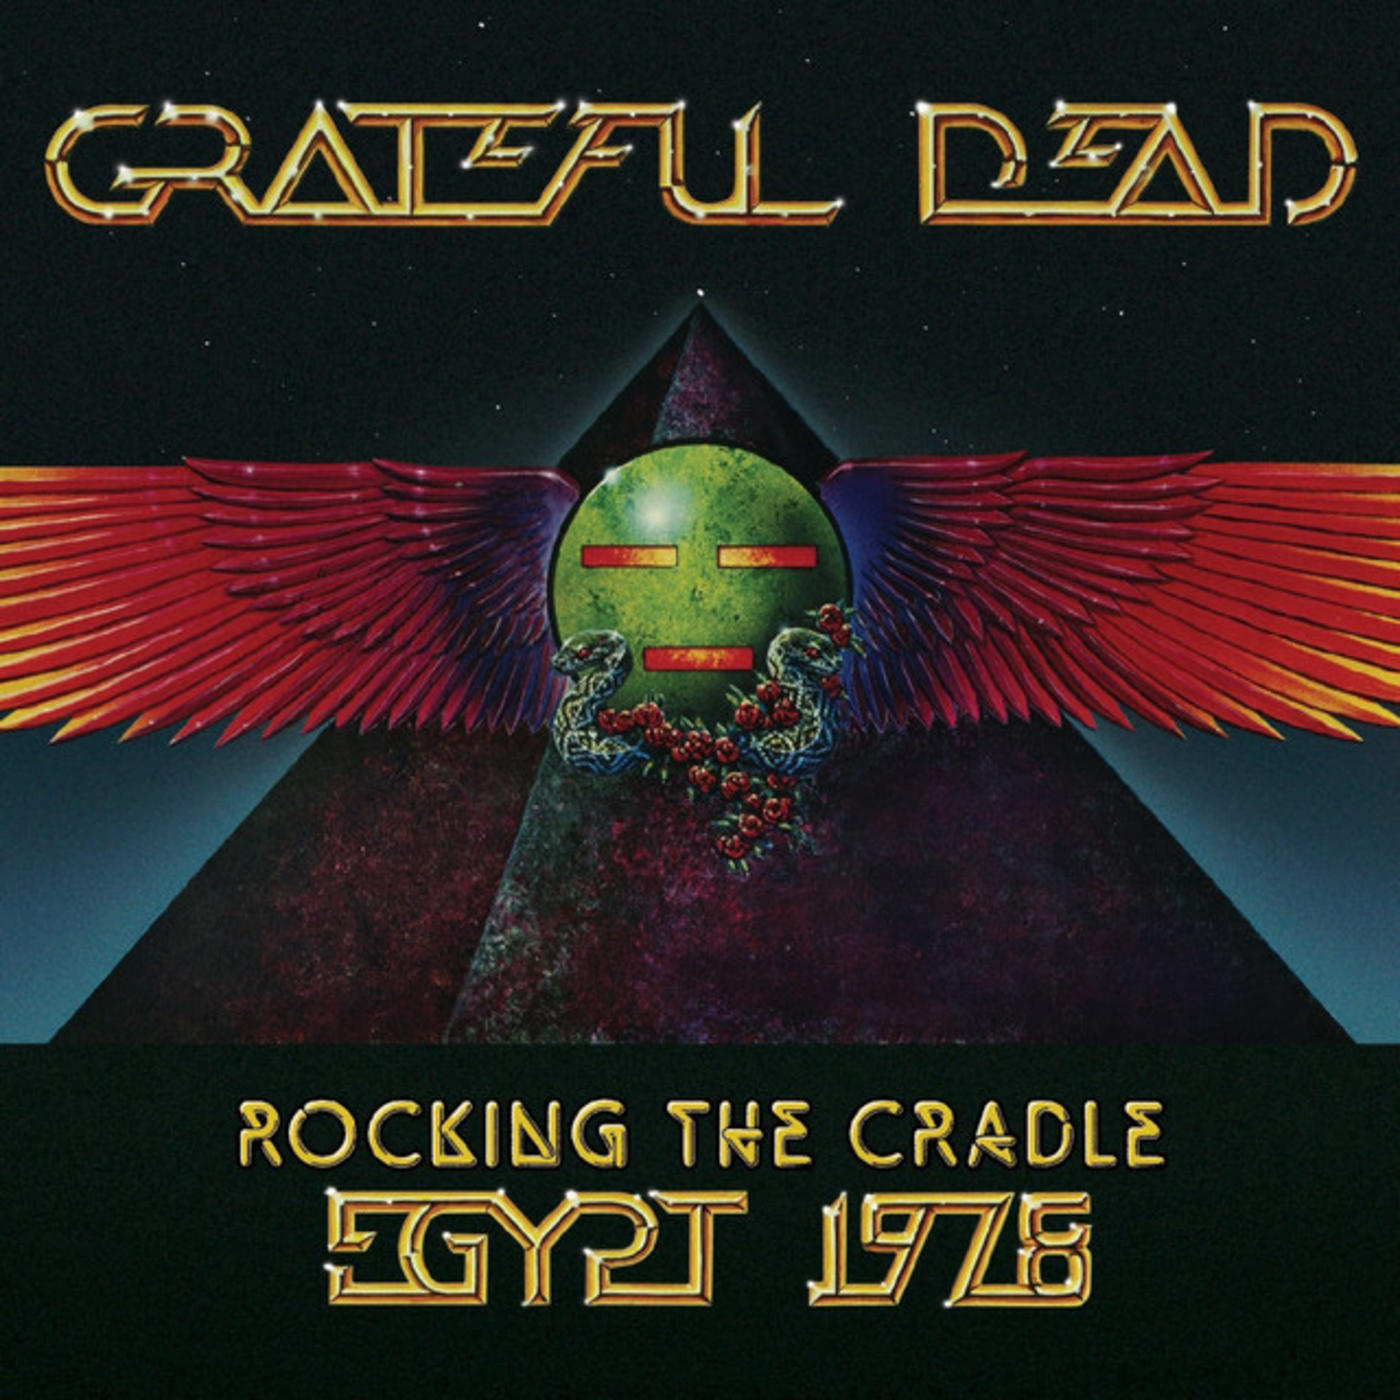 Rocking The Cradle, Egypt 1978